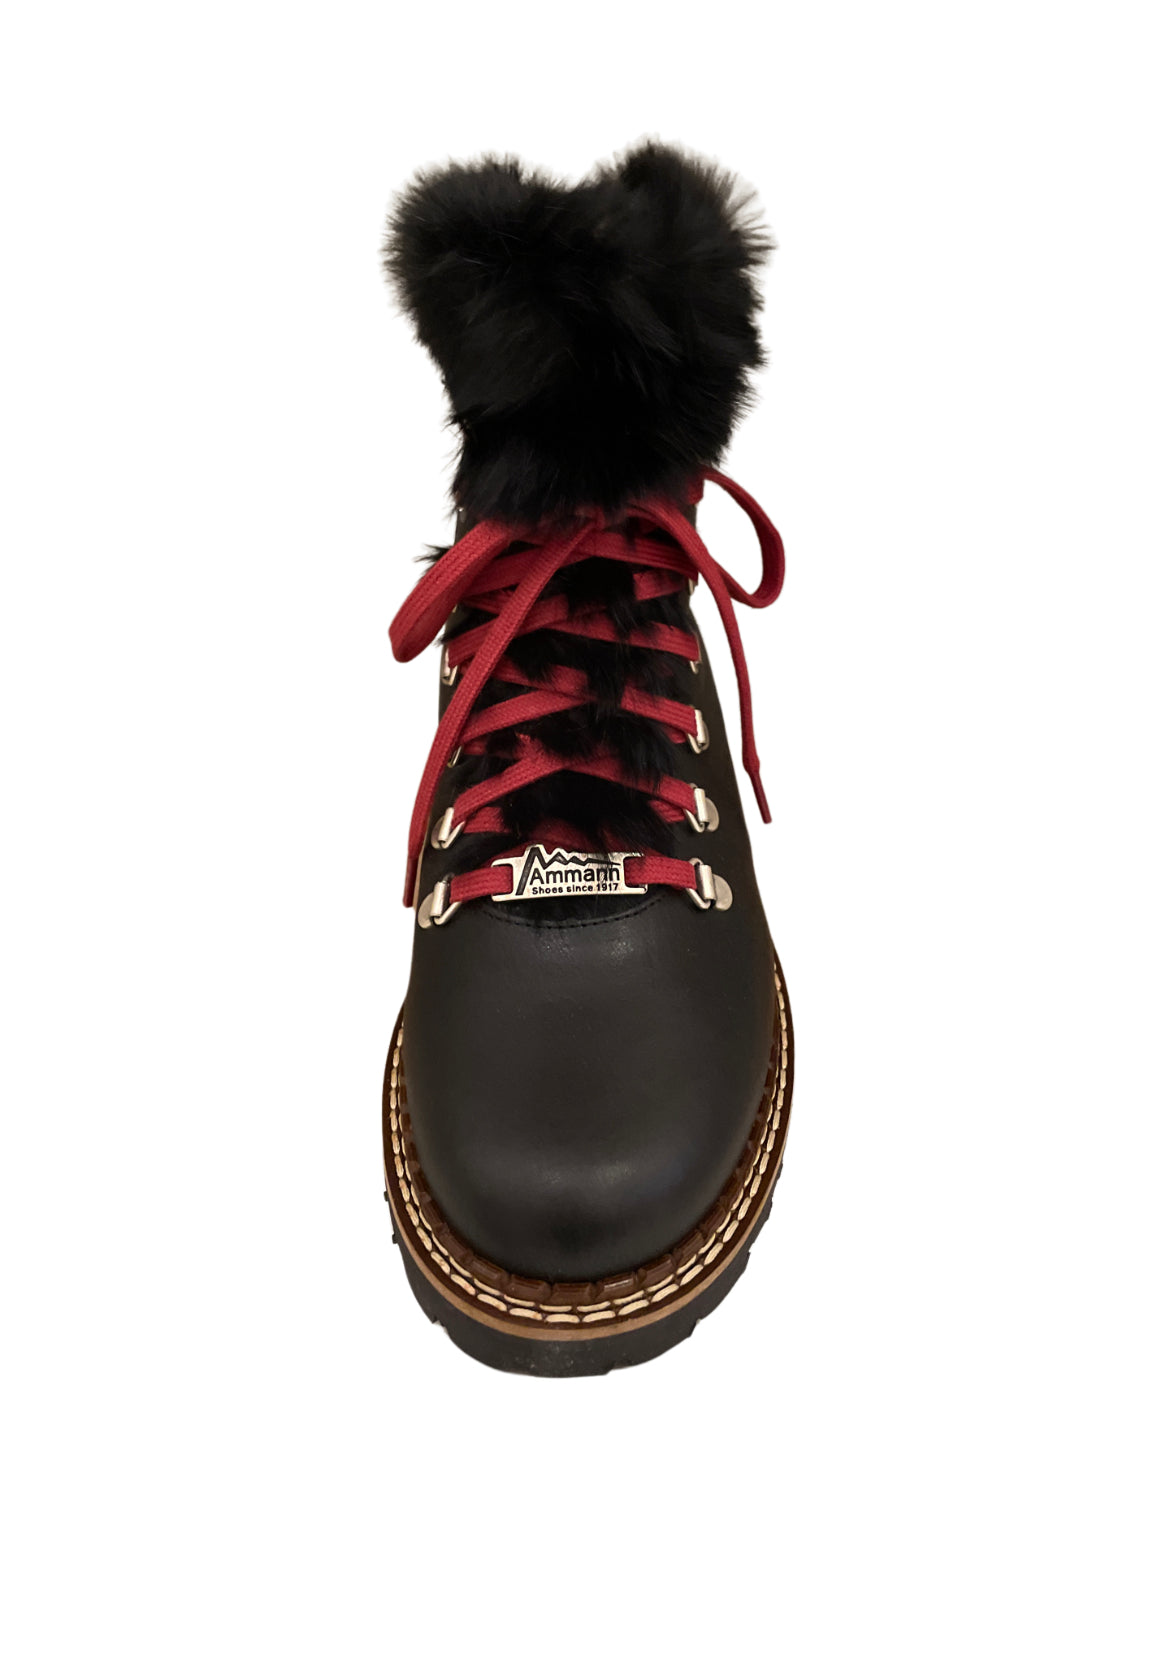 Ammann Splugen Black Fur Trim Smooth Leather Ankle Boots